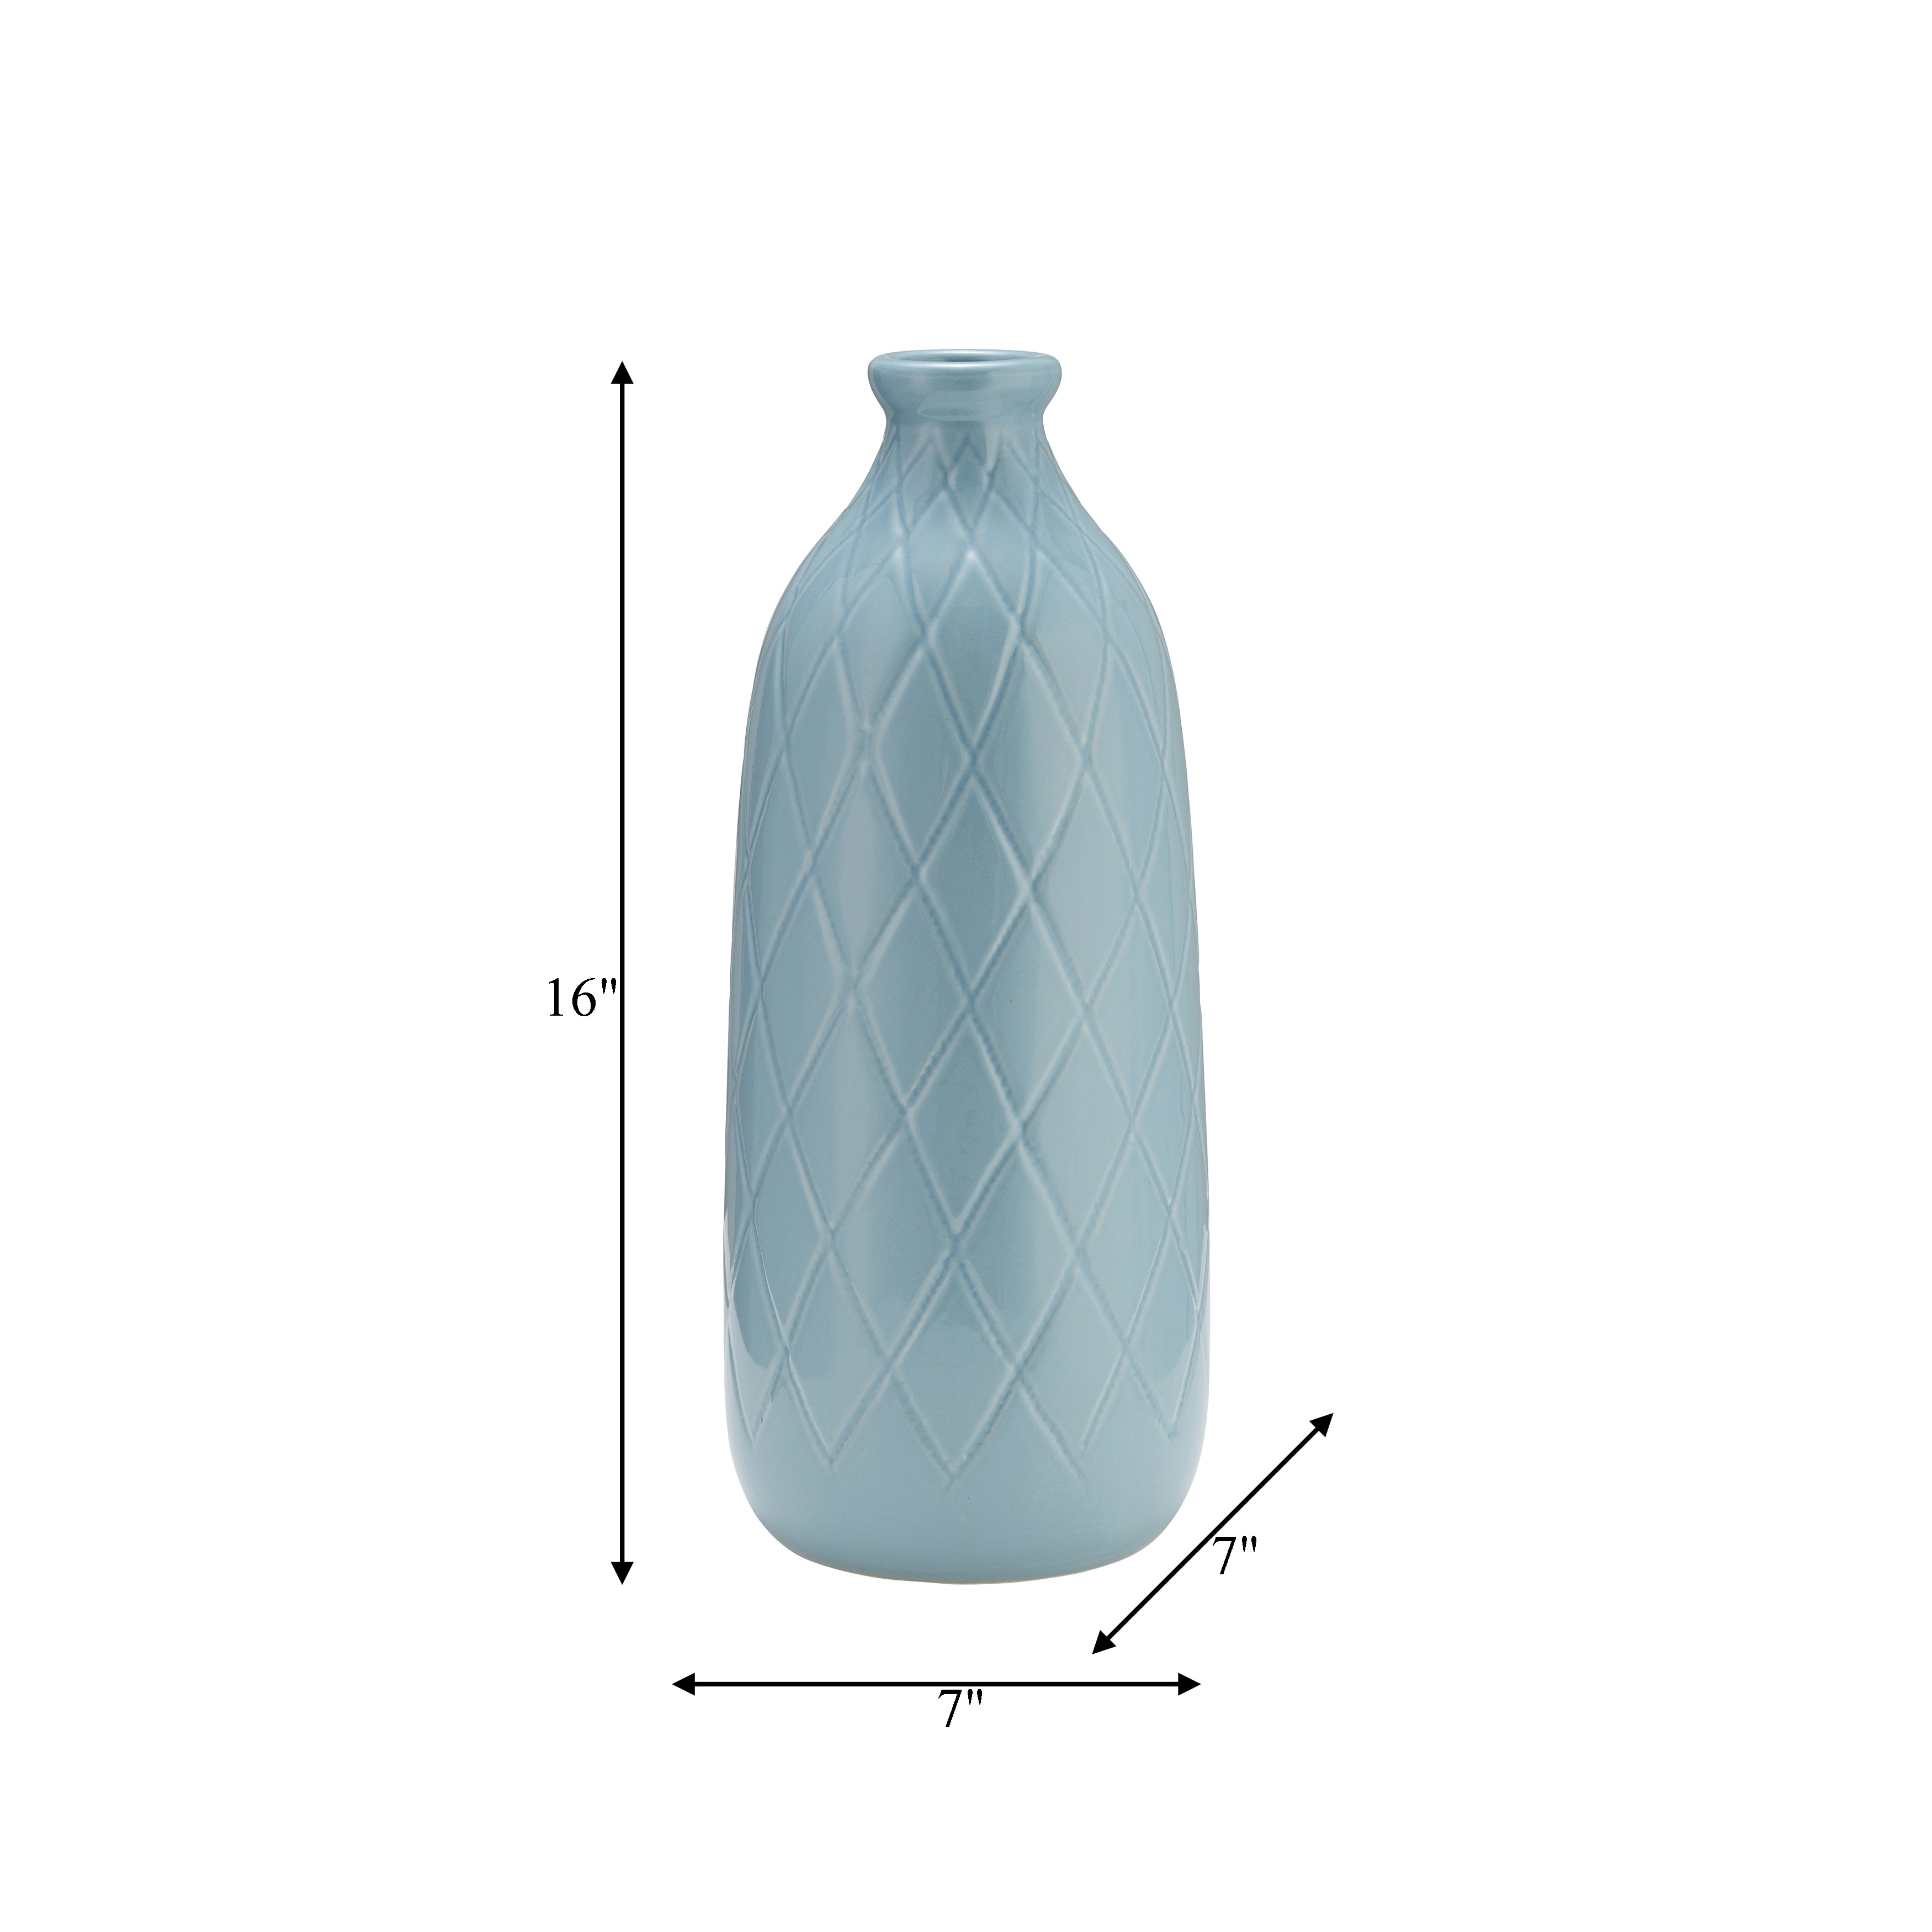 16" Ceramic Vase Contemporary Plaid Textured Blue Vase For Floral Arrangements Decorative Table Accent for Home or